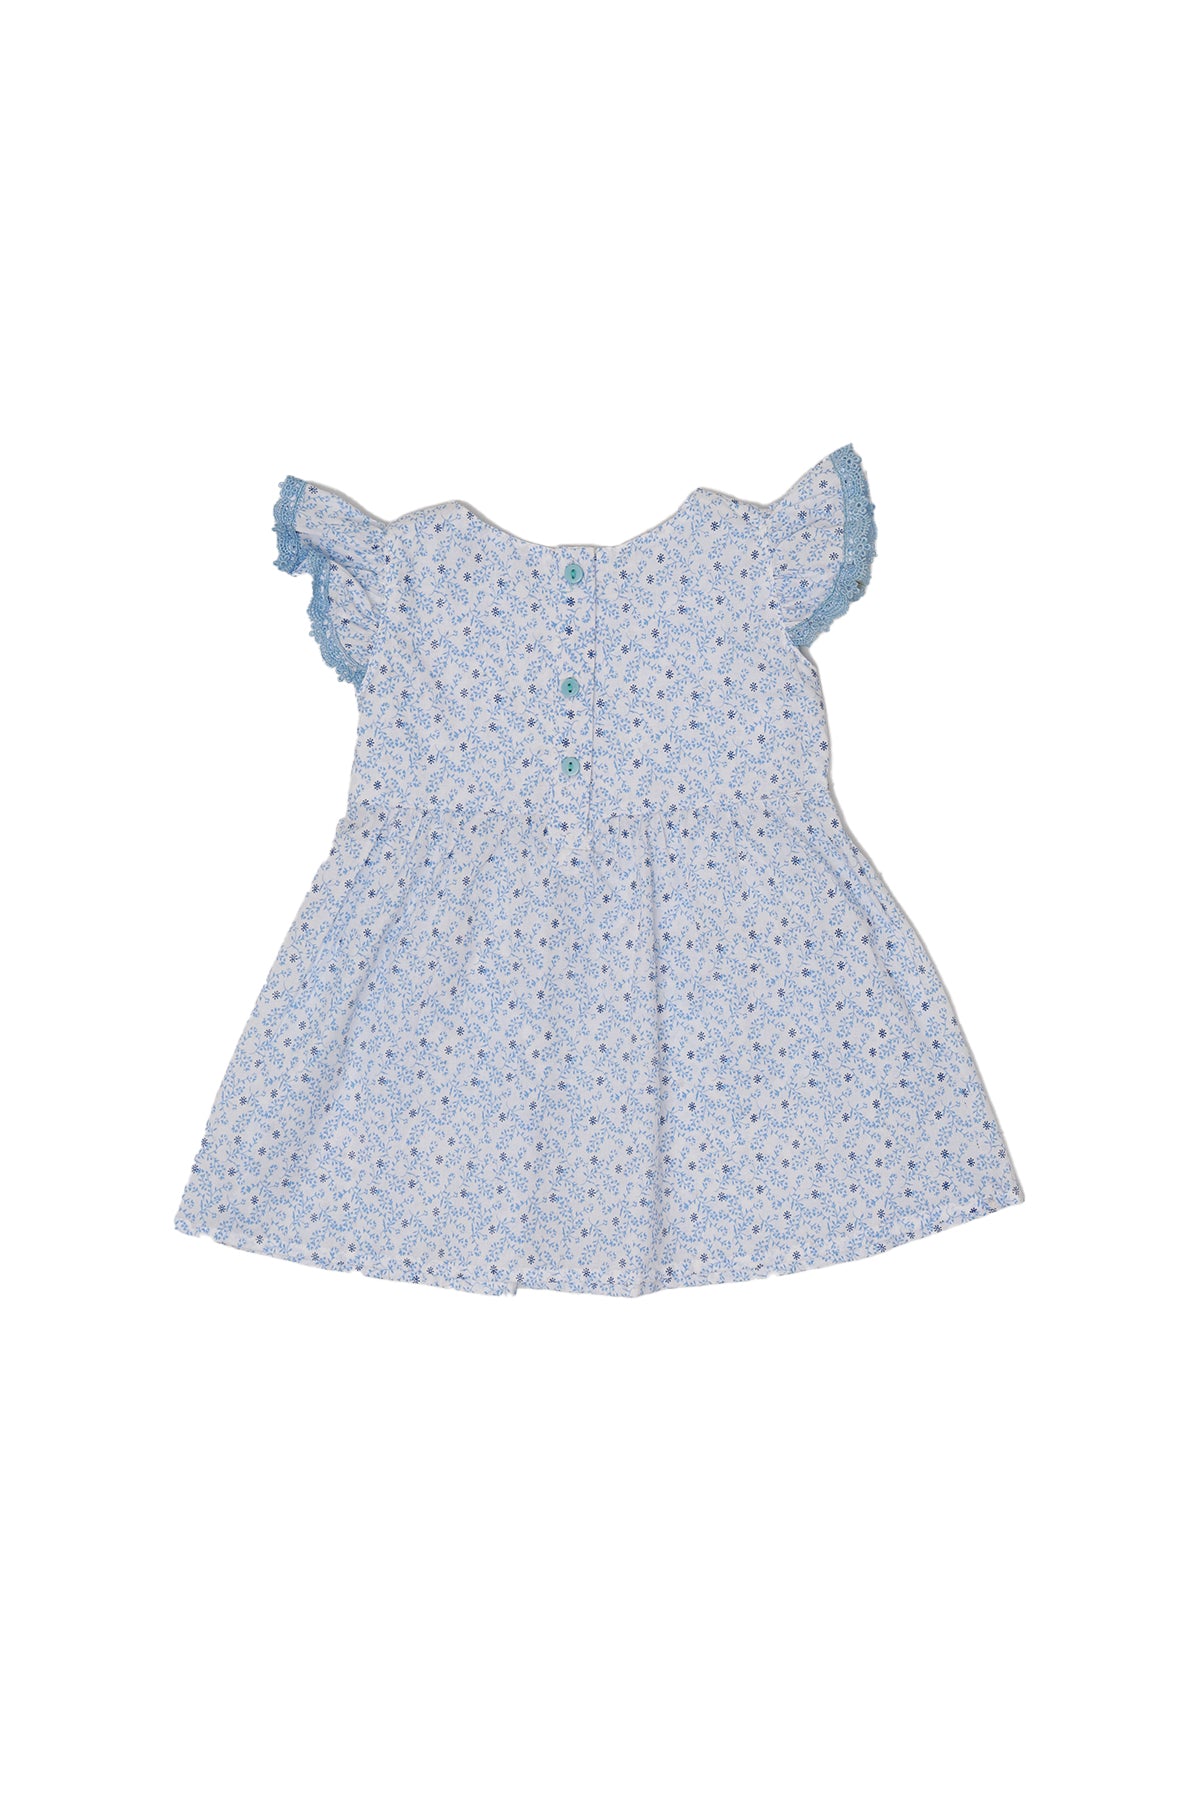 Ozone Baby Girls Sleeveless Printed Dress